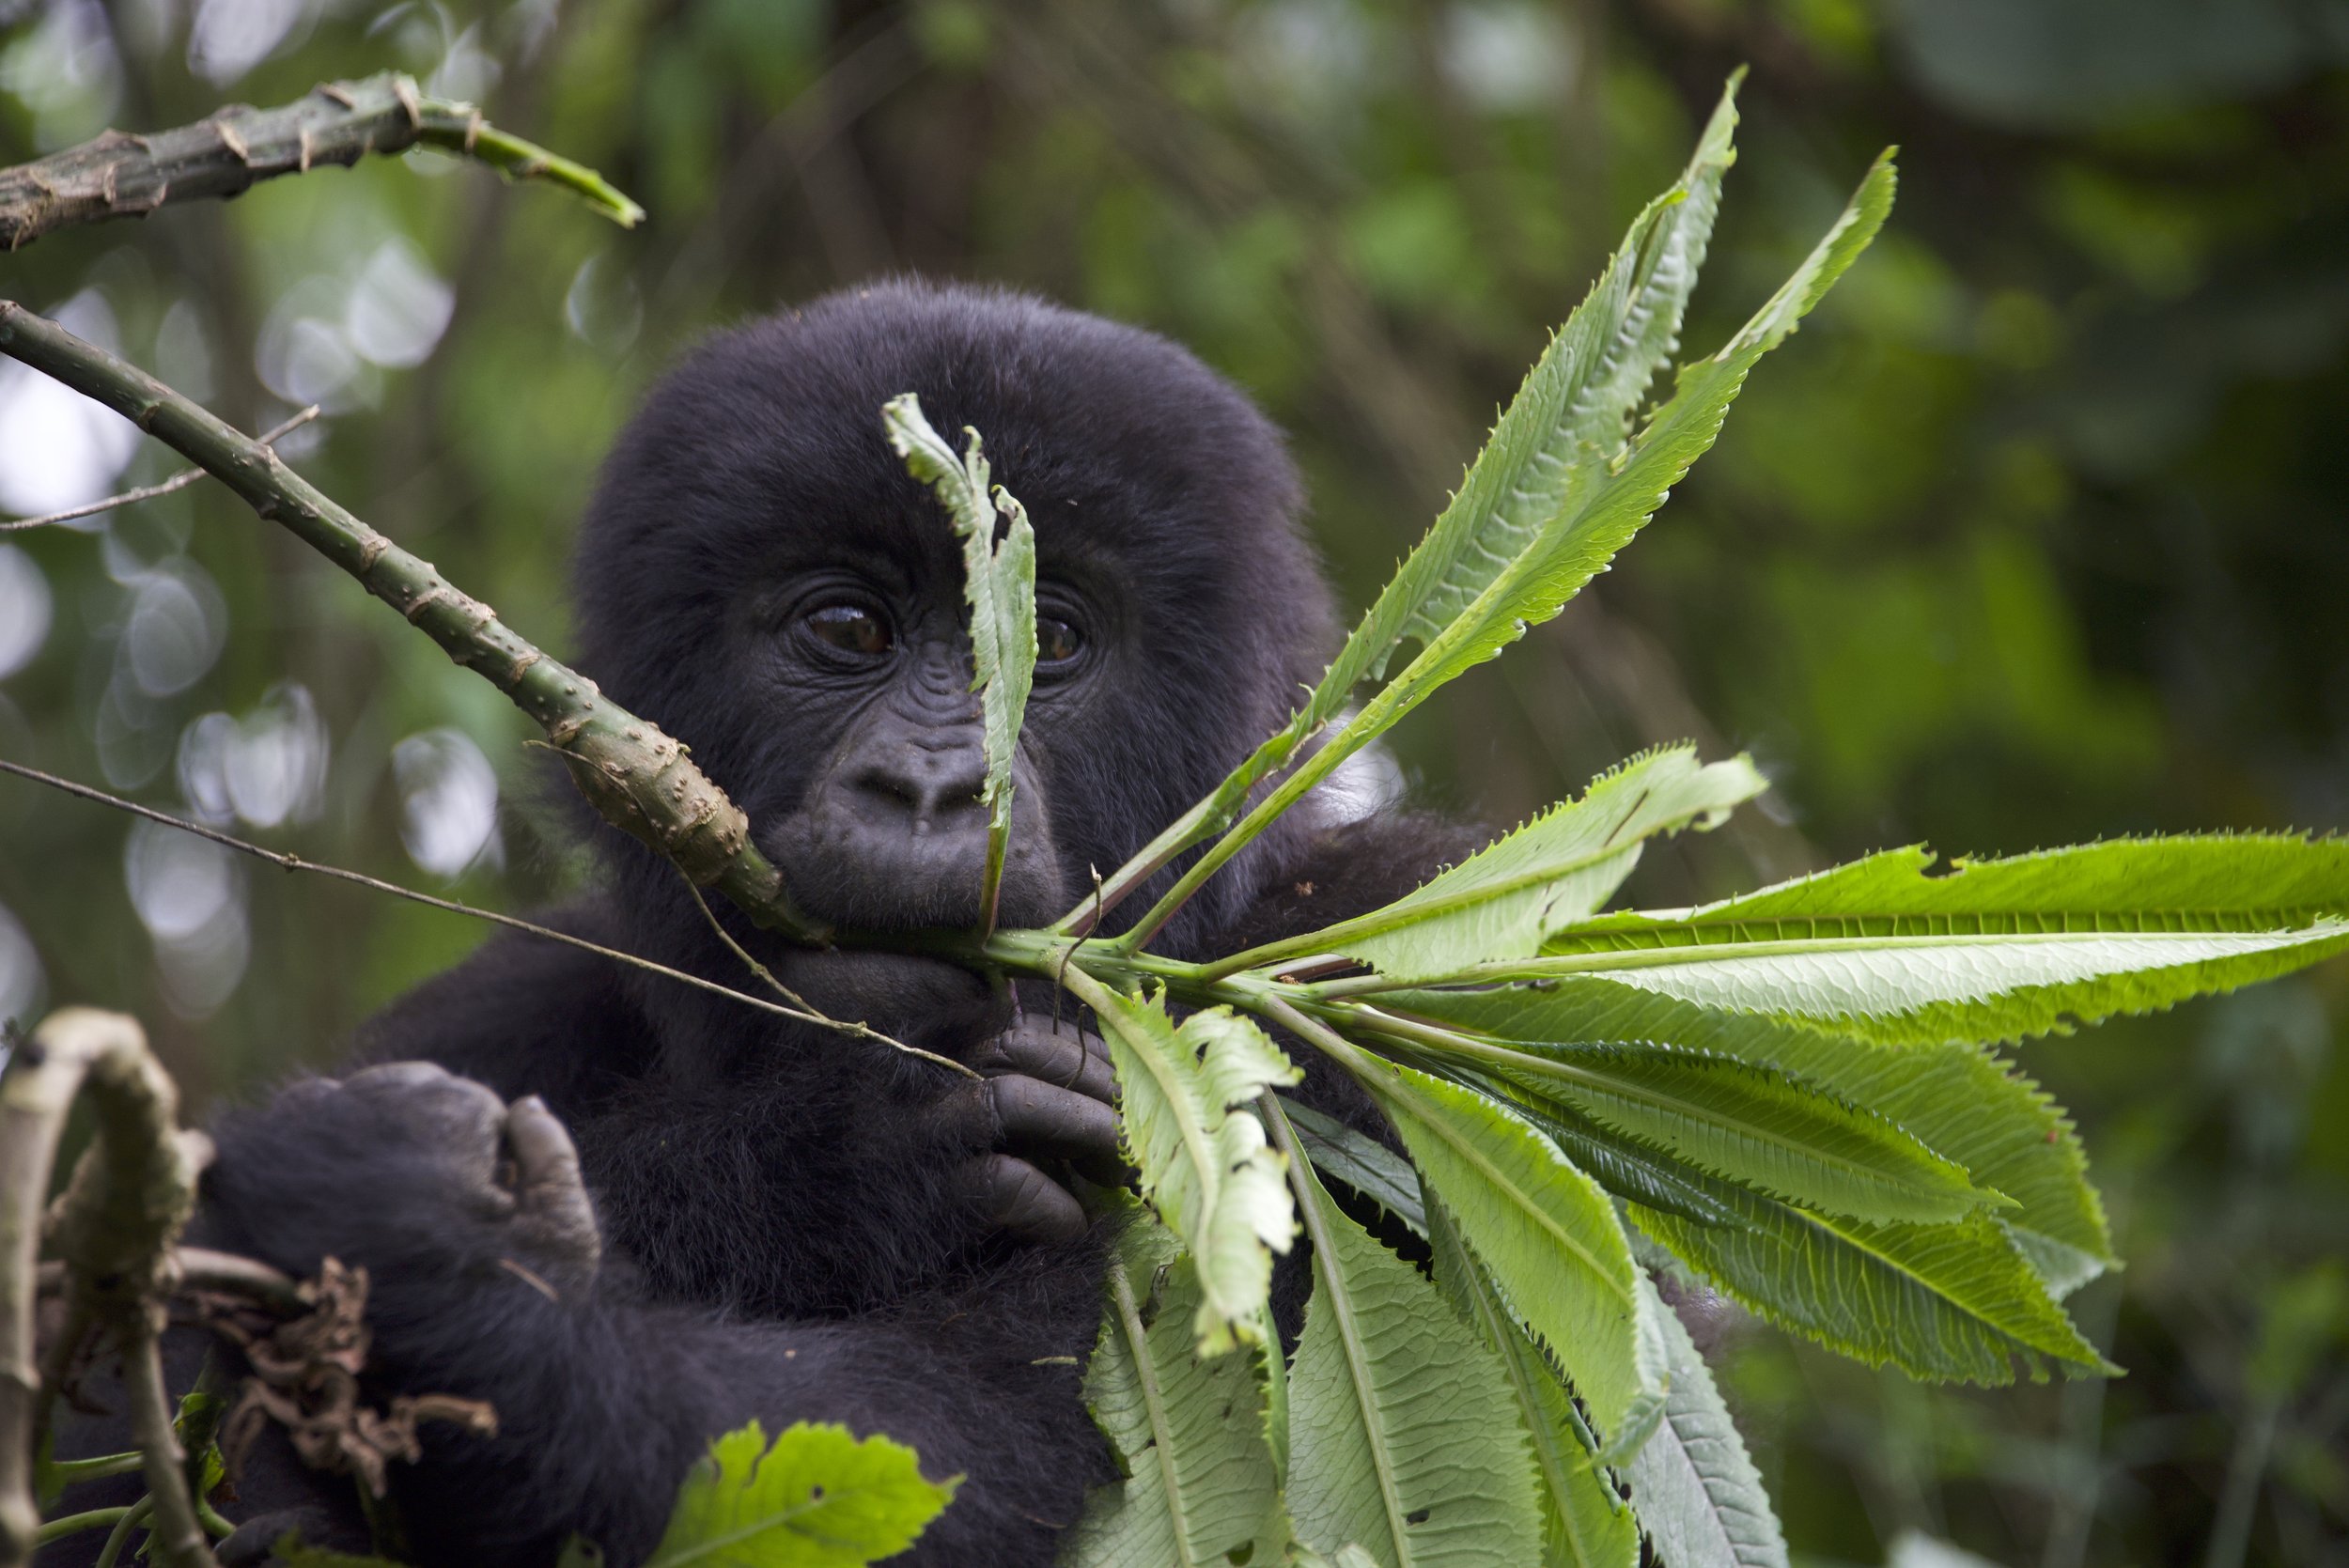  Infant gorilla eating. Photo courtesy of Caitlin Starowicz. 